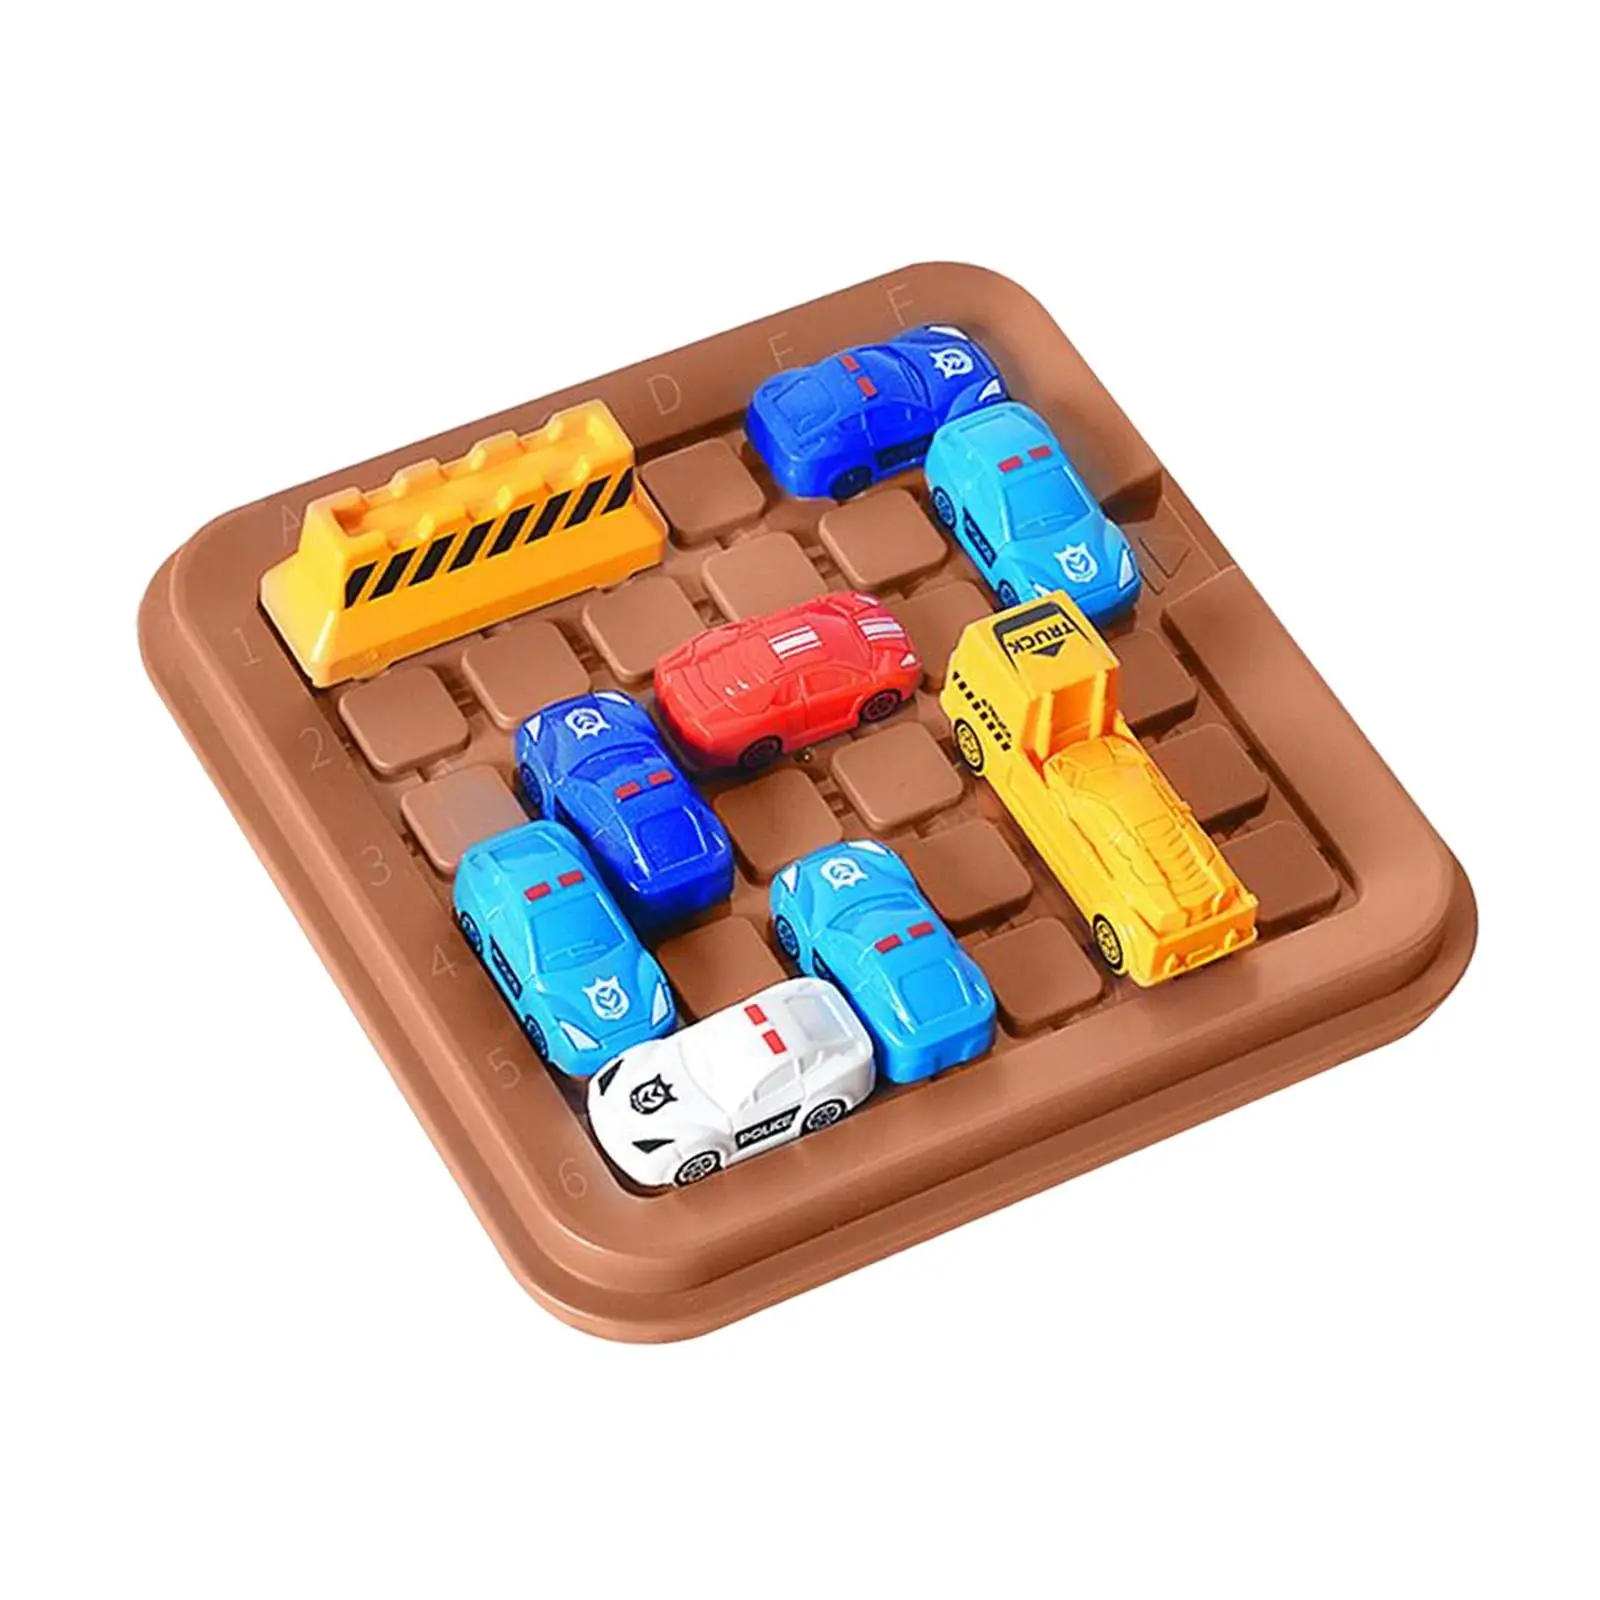 Slide Puzzle Games Educational Toys Development Intellectual Development Toys for Boys Girls